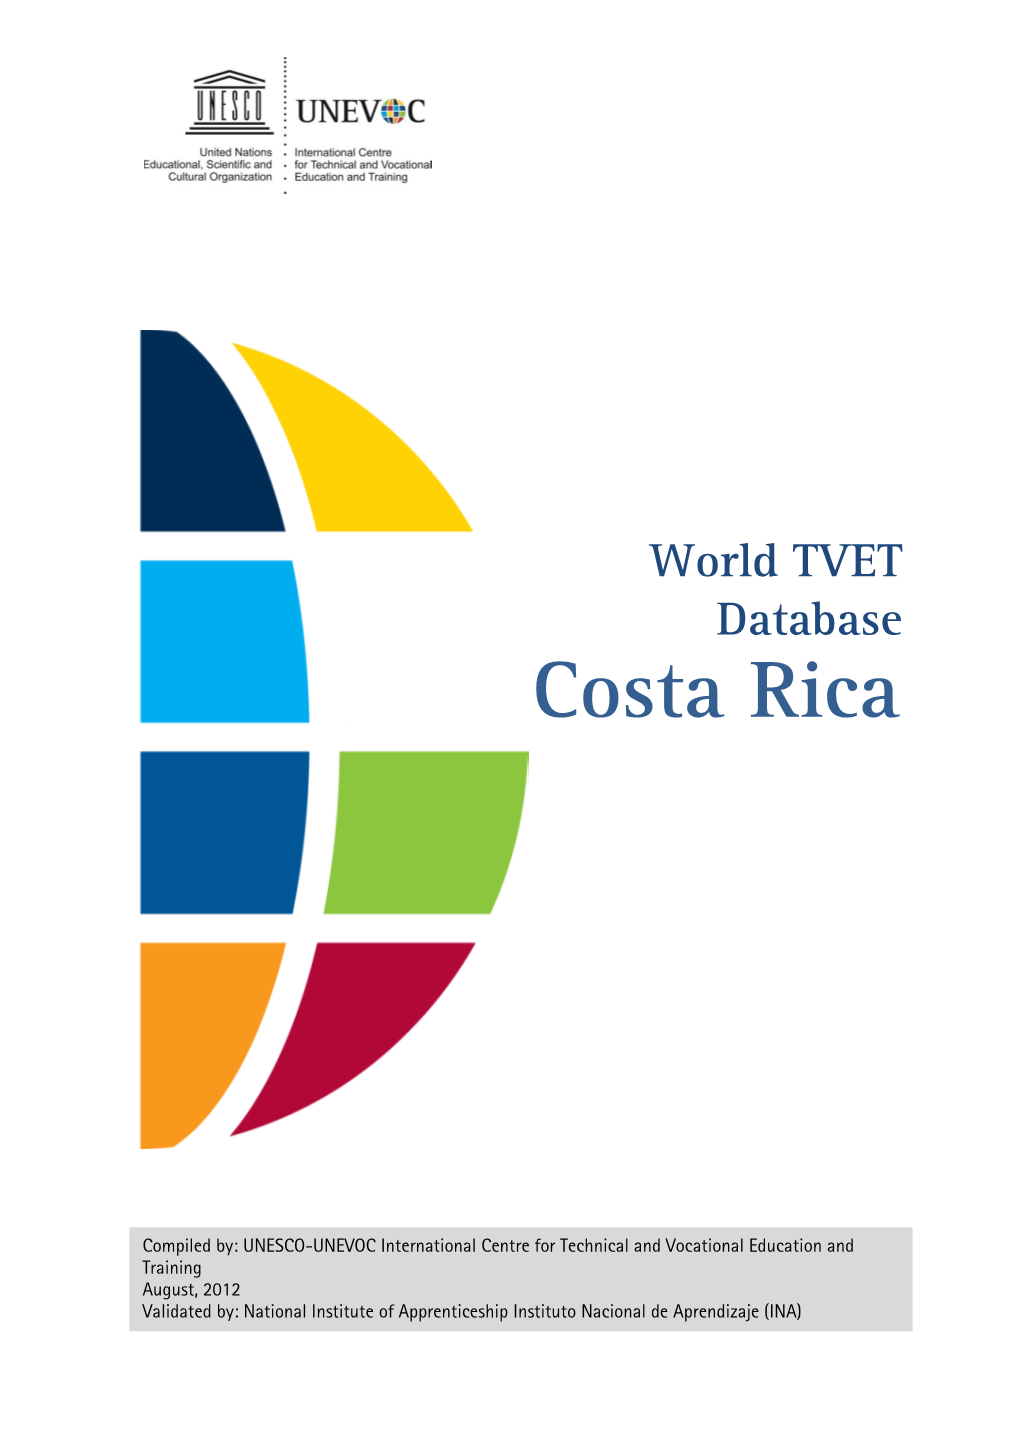 World TVET Database, Costa Rica